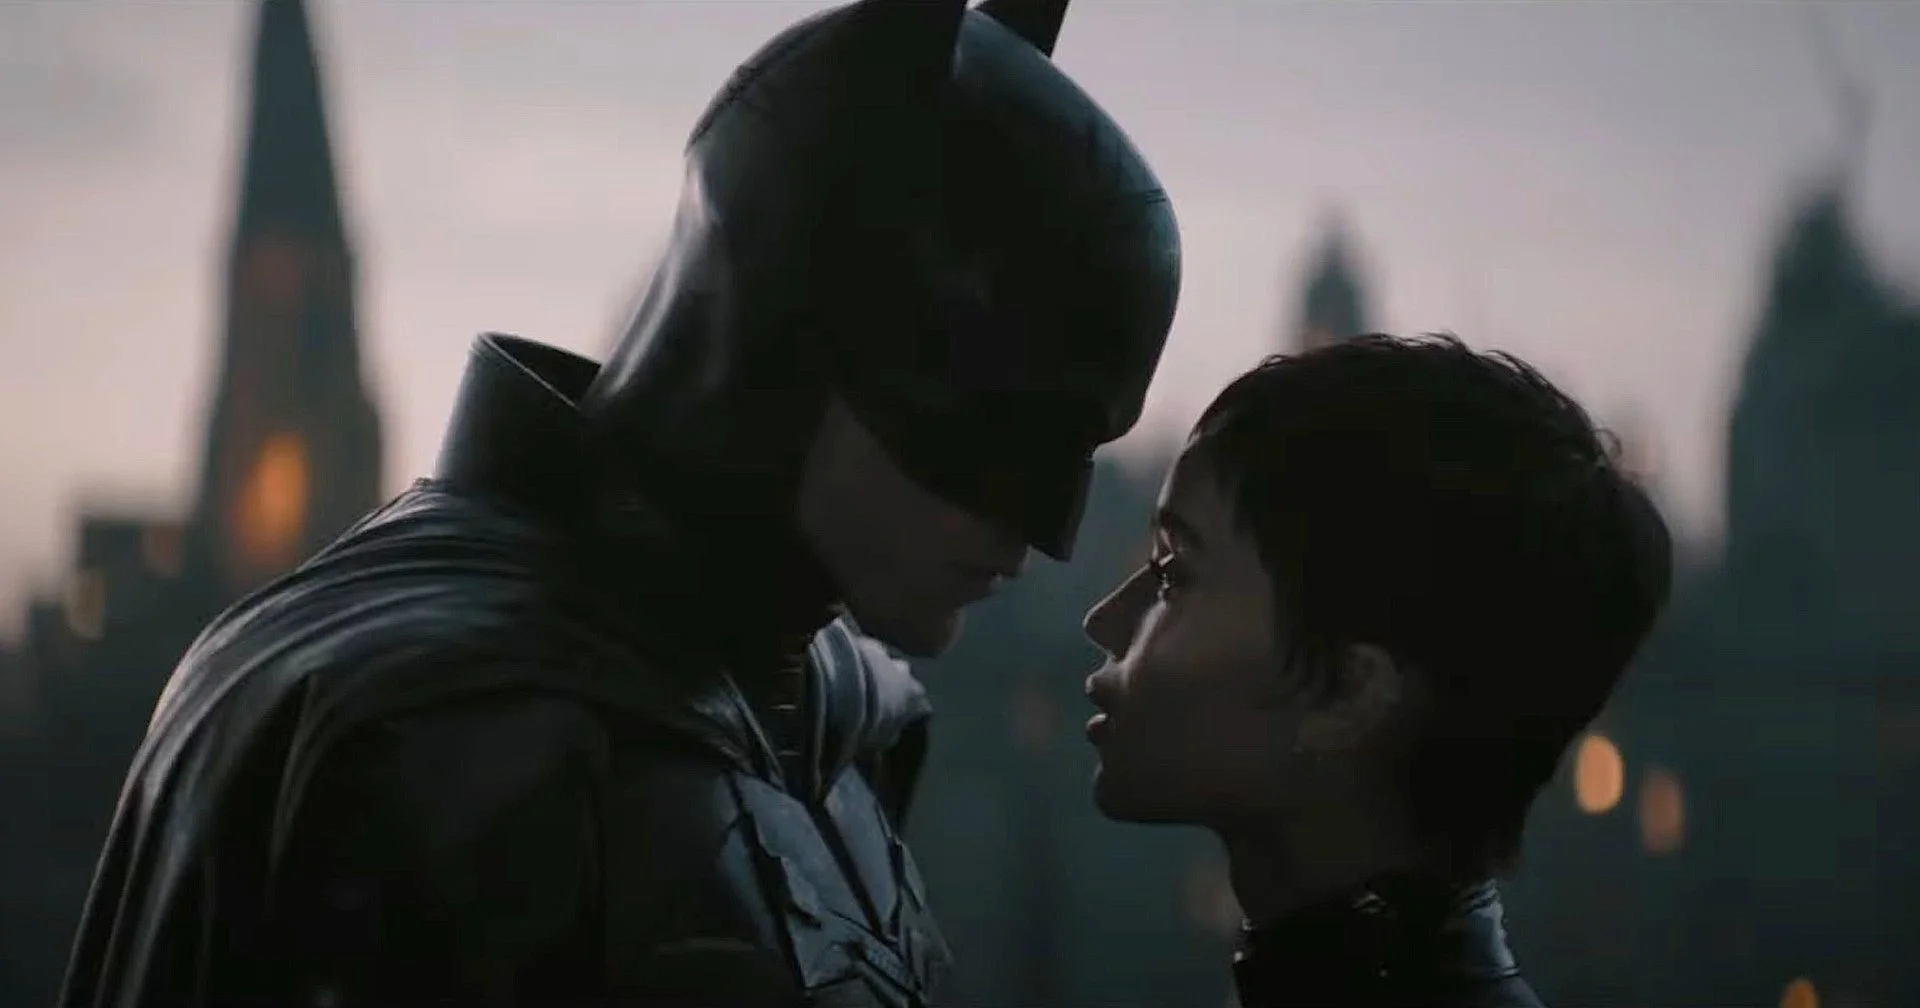 Обложка: кадр из фильма «Бэтмен»